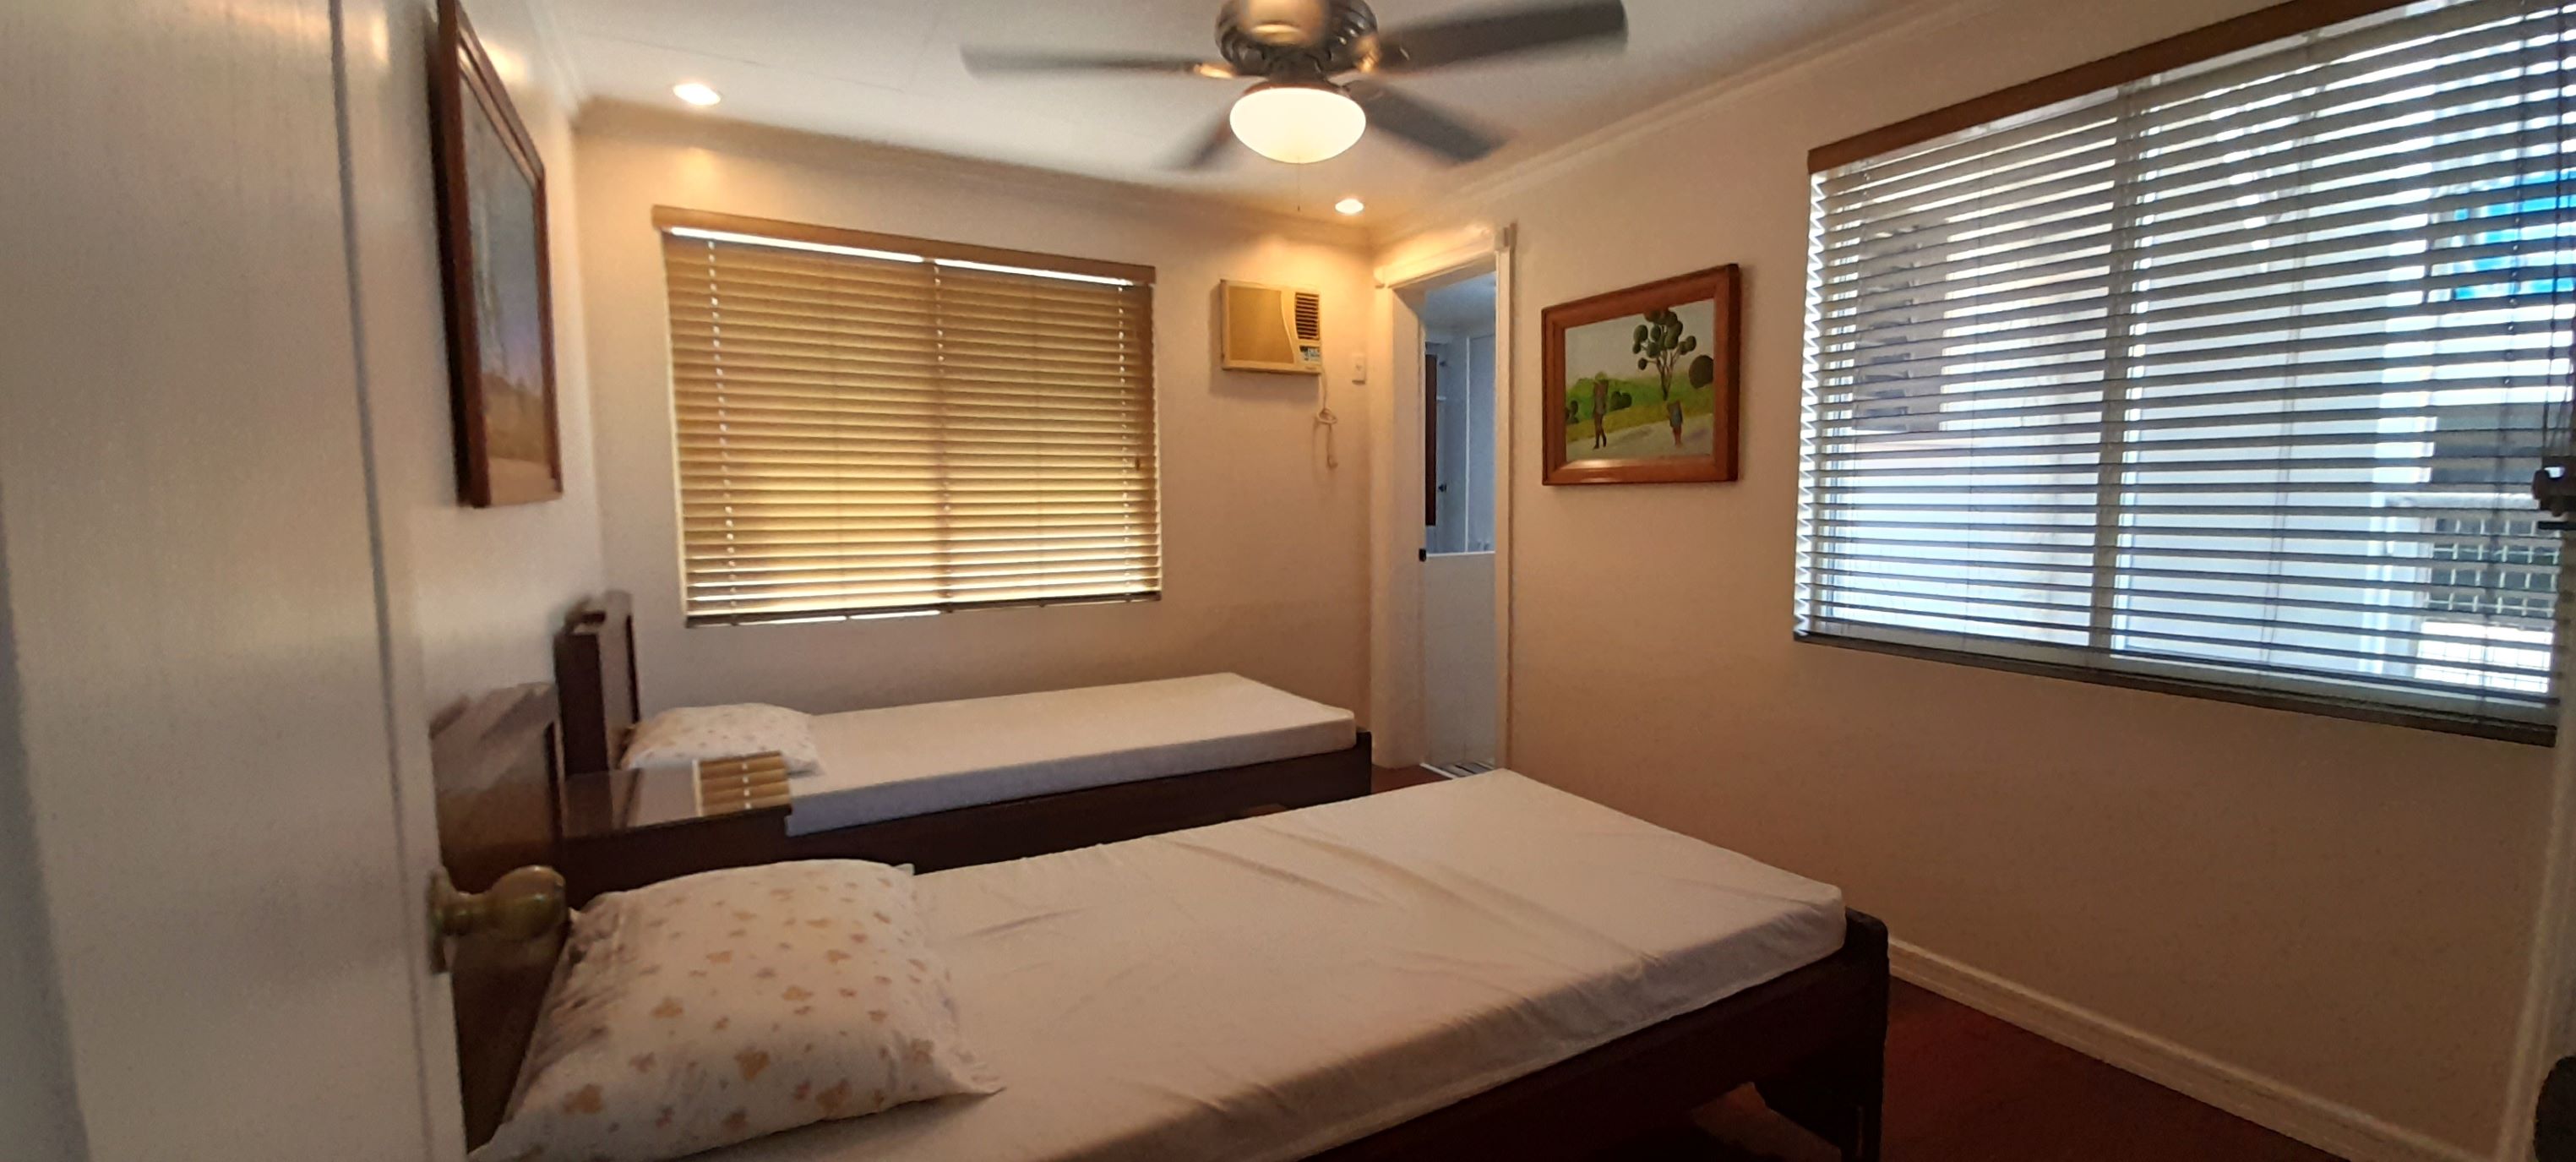 3-bedroom-furnished-house-in-banilad-cebu-city-cebu